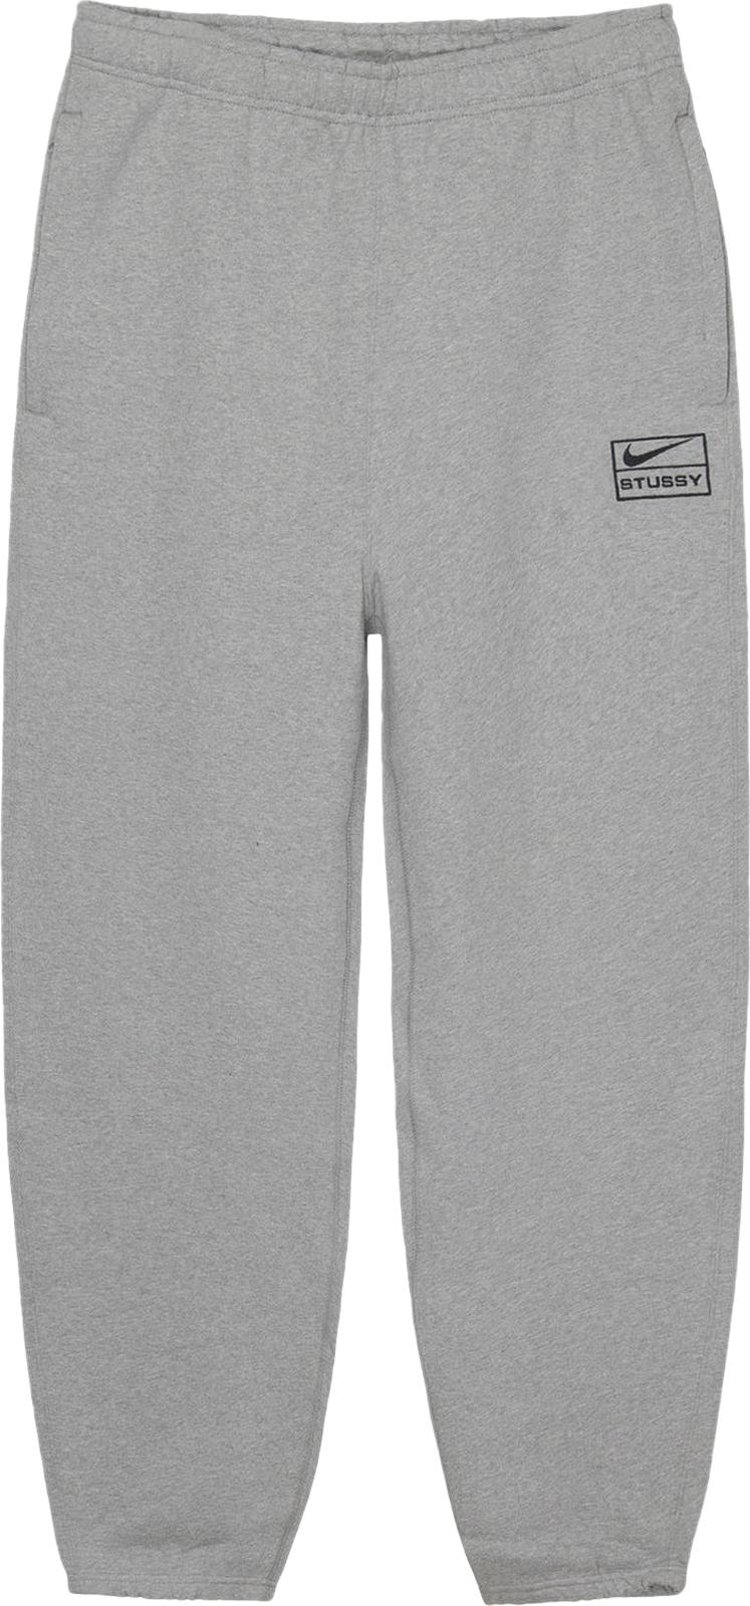 Nike x Stussy Fleece Pant (Dark Grey Heather)